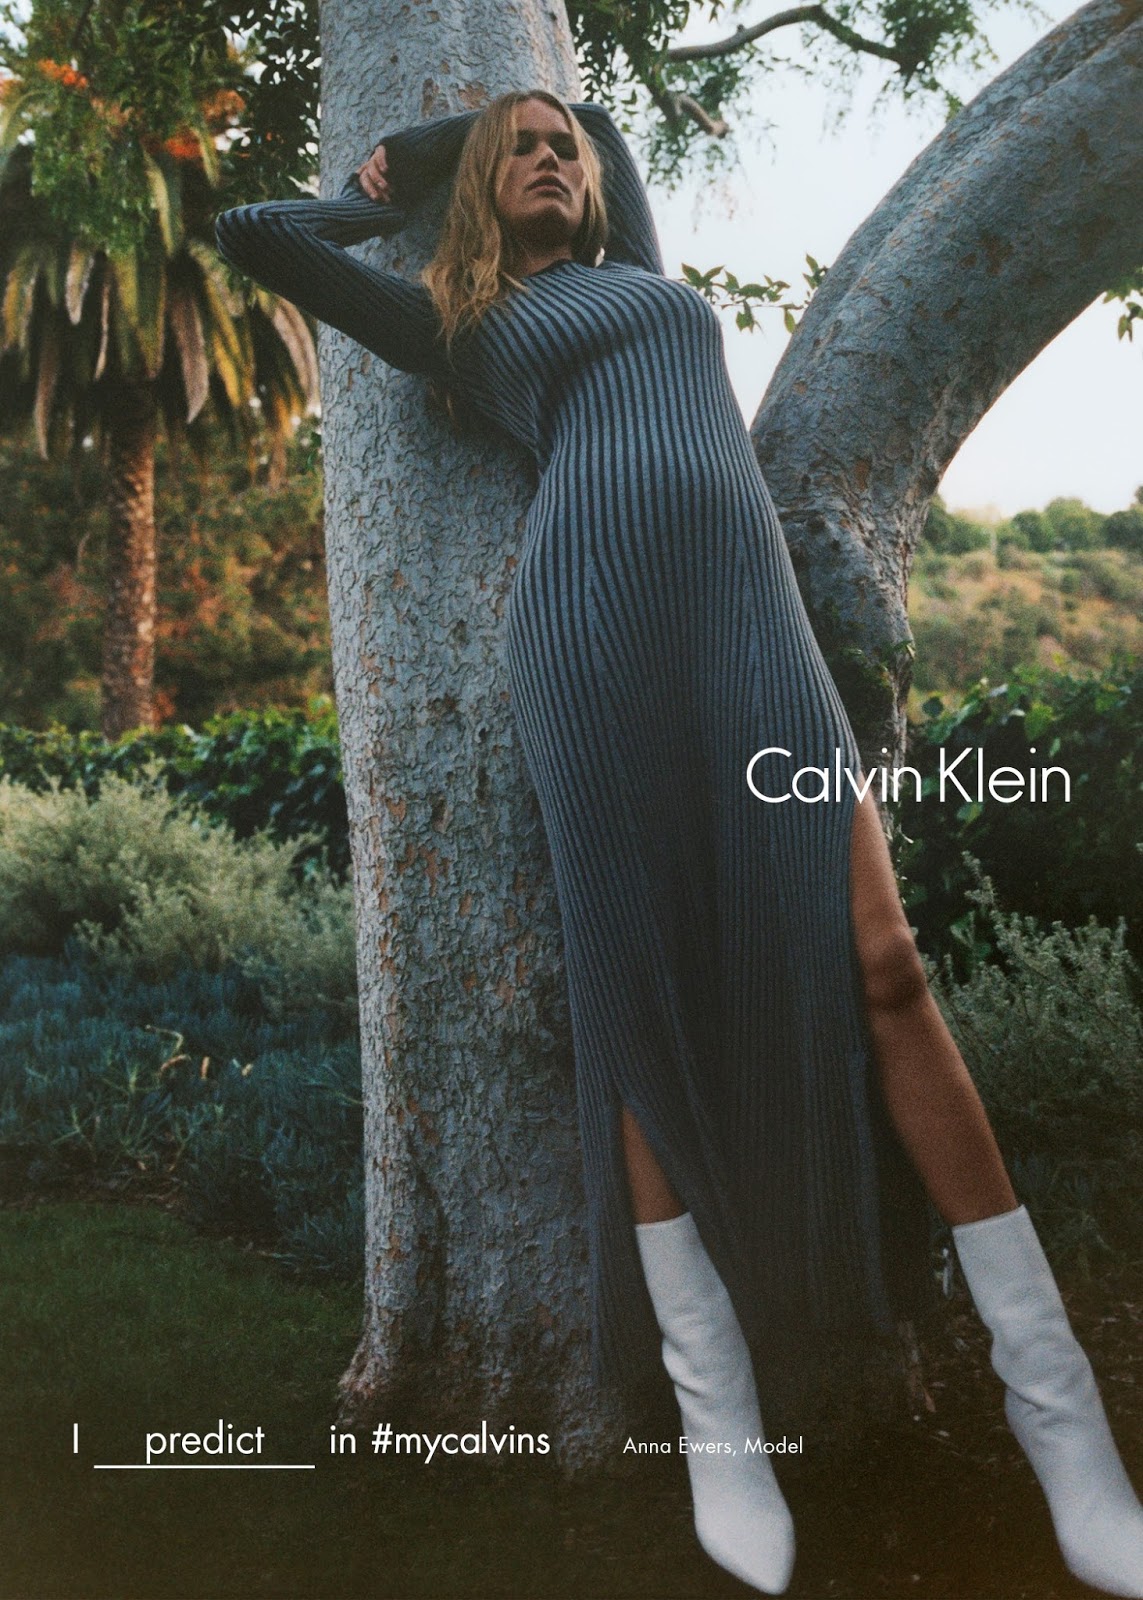 Anna Ewers by Tyrone Lebon for Calvin Klein Autumn/Winter 2016 Campaign